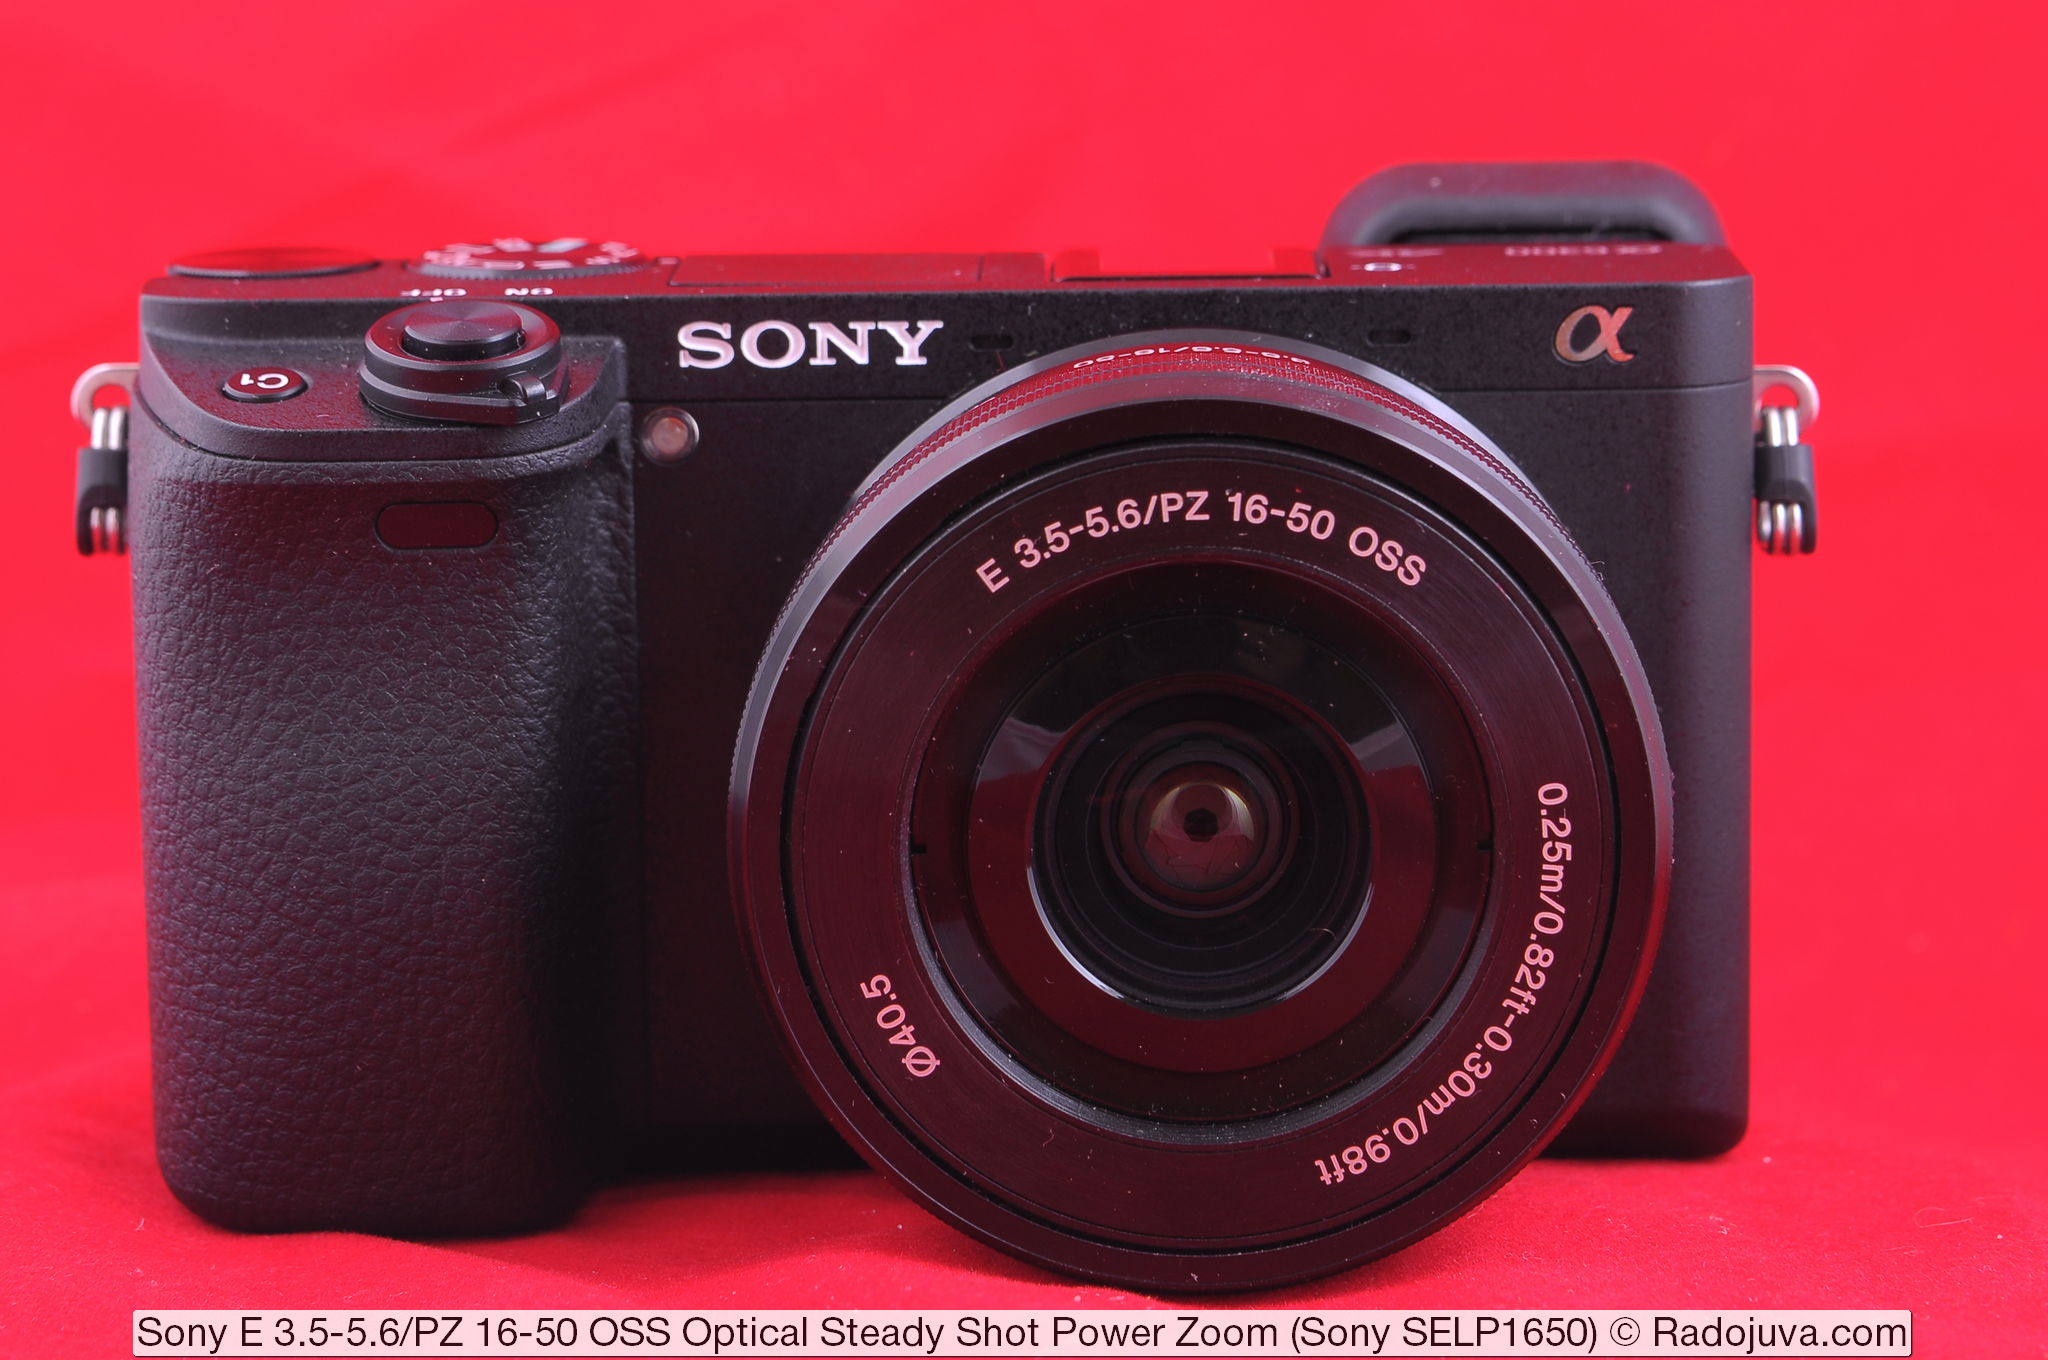 Sony E 3.5-5.6 / PZ 16-50 OSS Optical Steady Shot Power Zoom (Sony